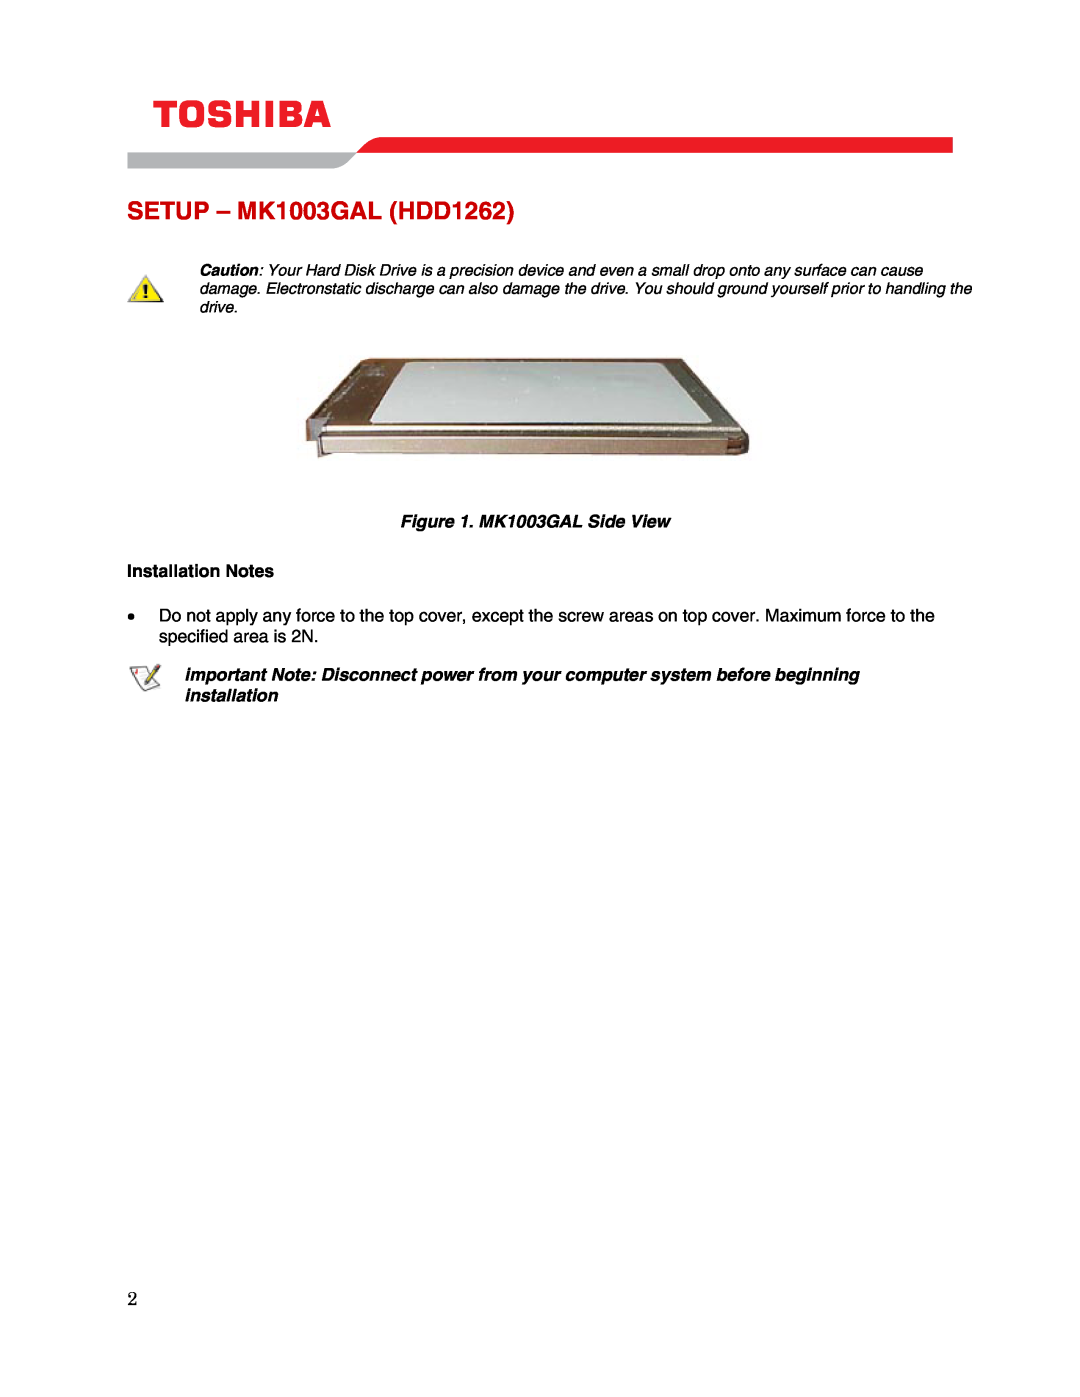 Toshiba user manual SETUP - MK1003GAL HDD1262, MK1003GAL Side View, Installation Notes 